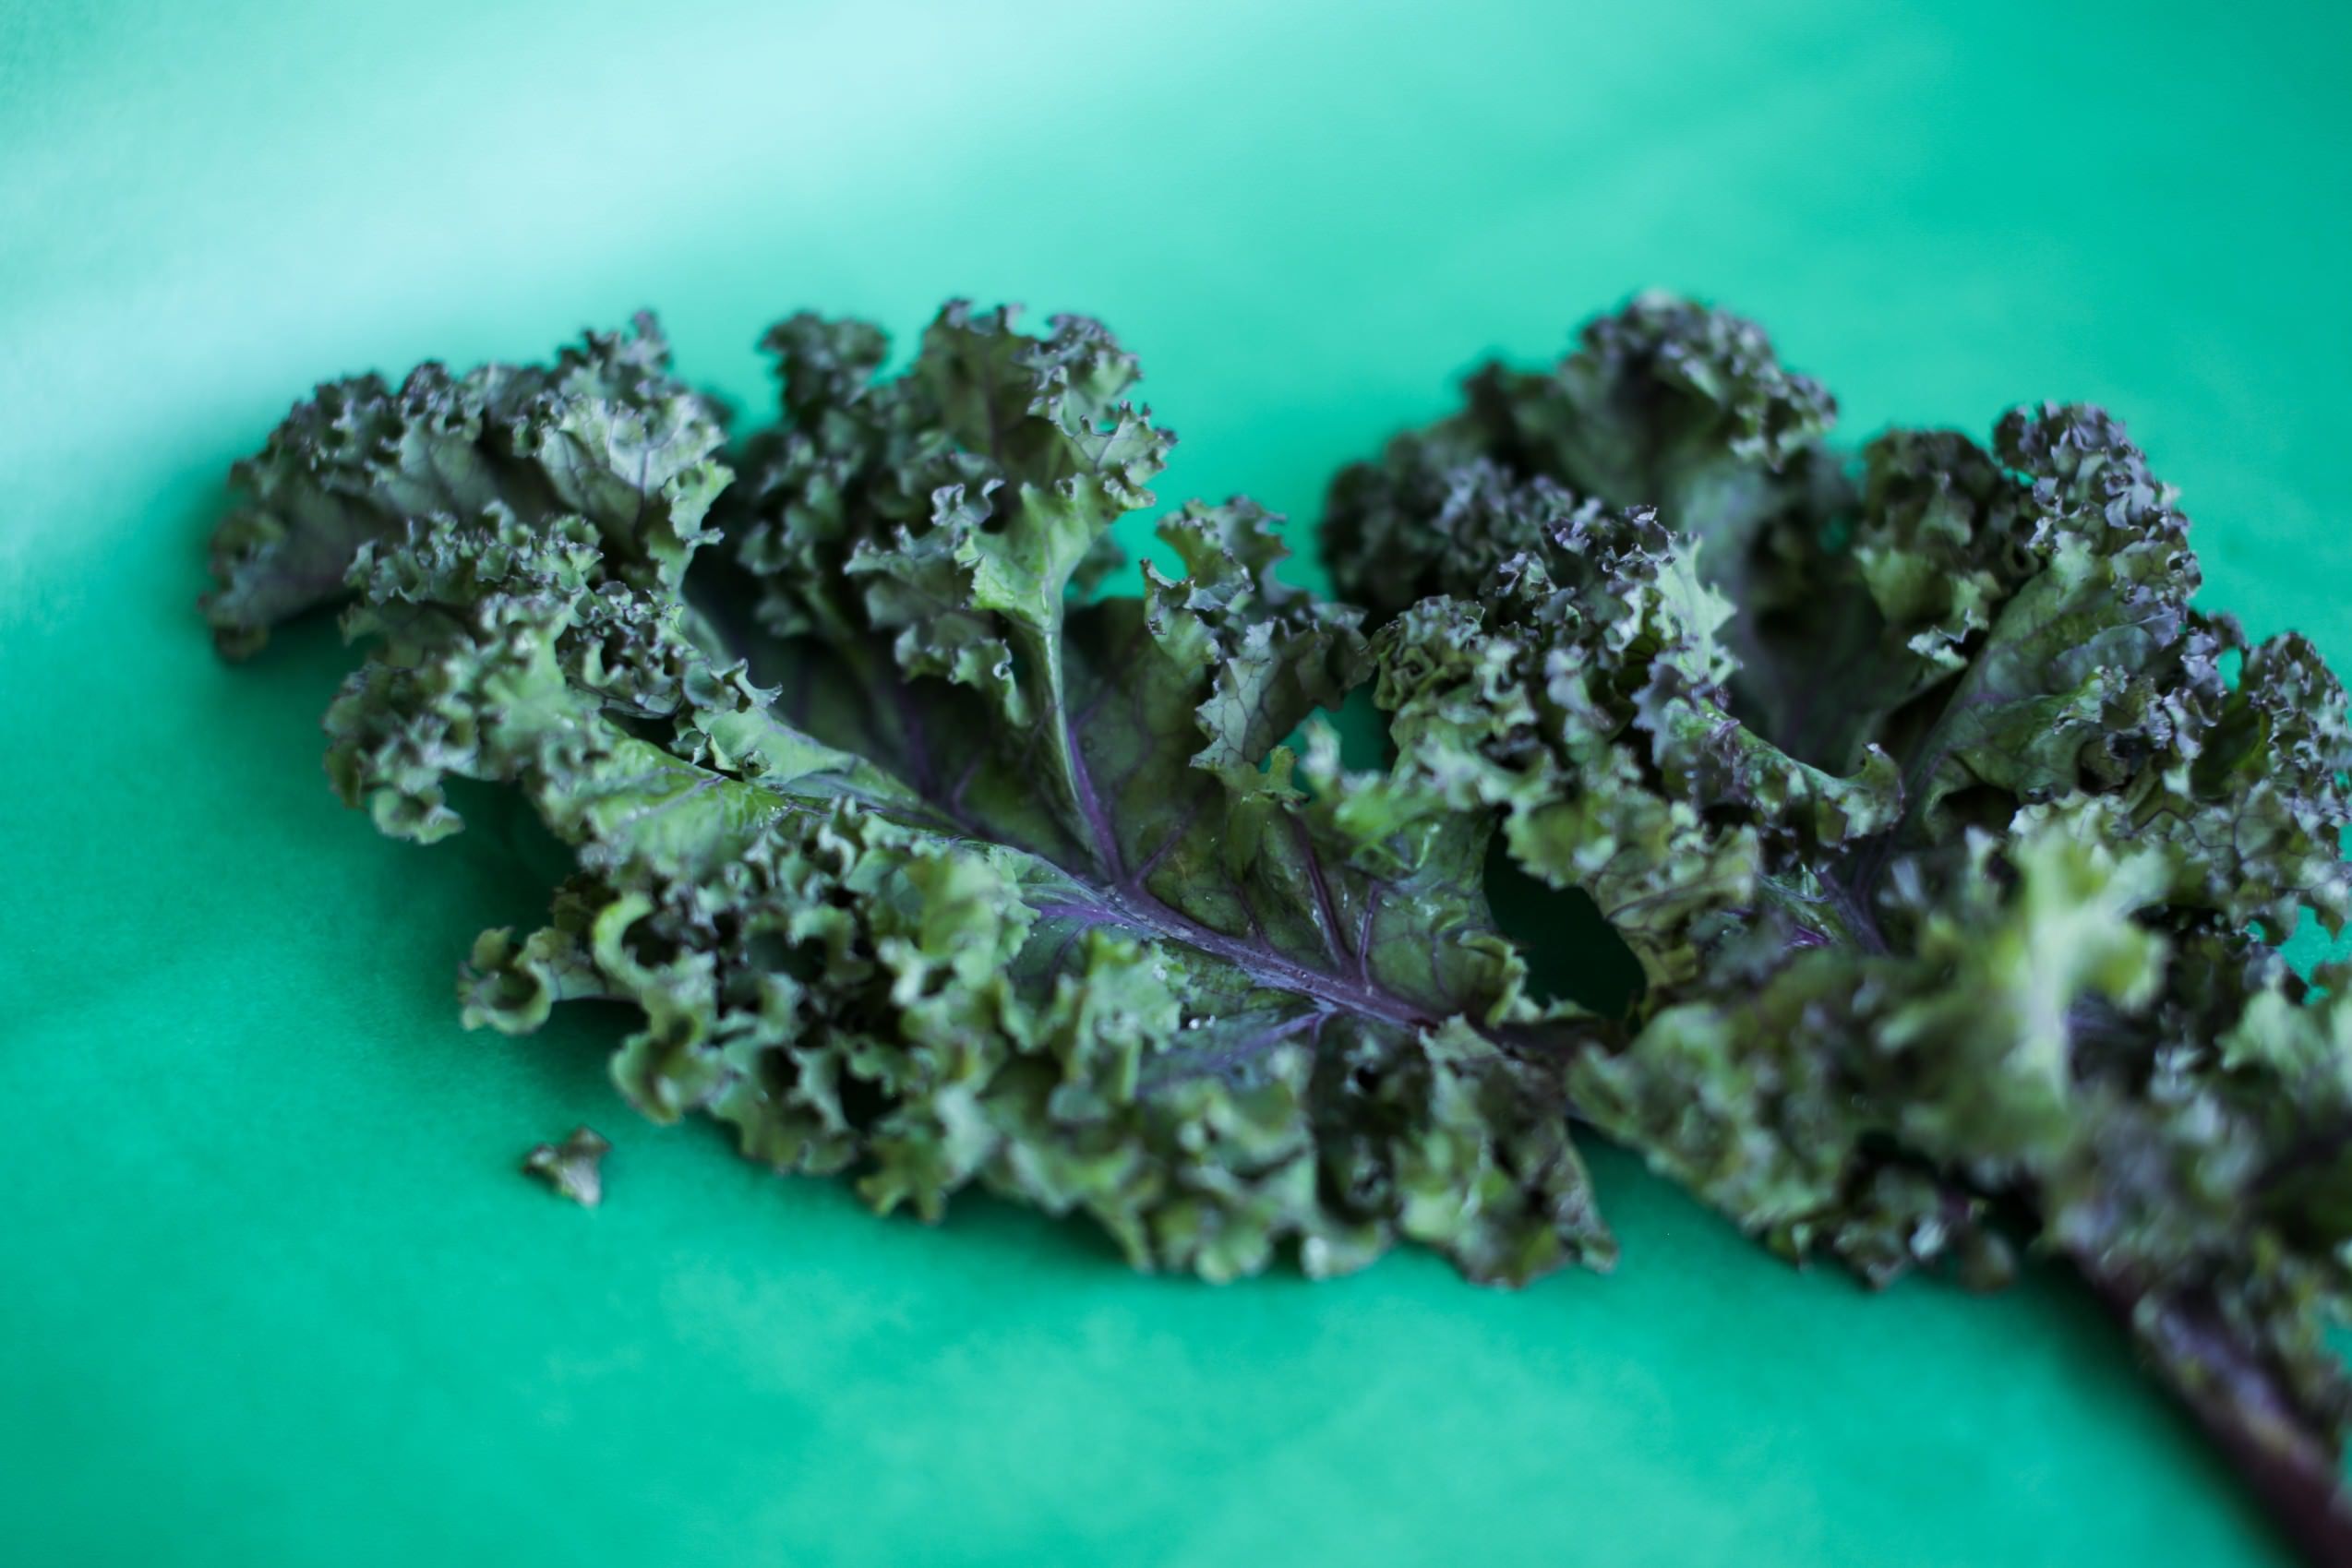 Kale - Nutrition Stripped®